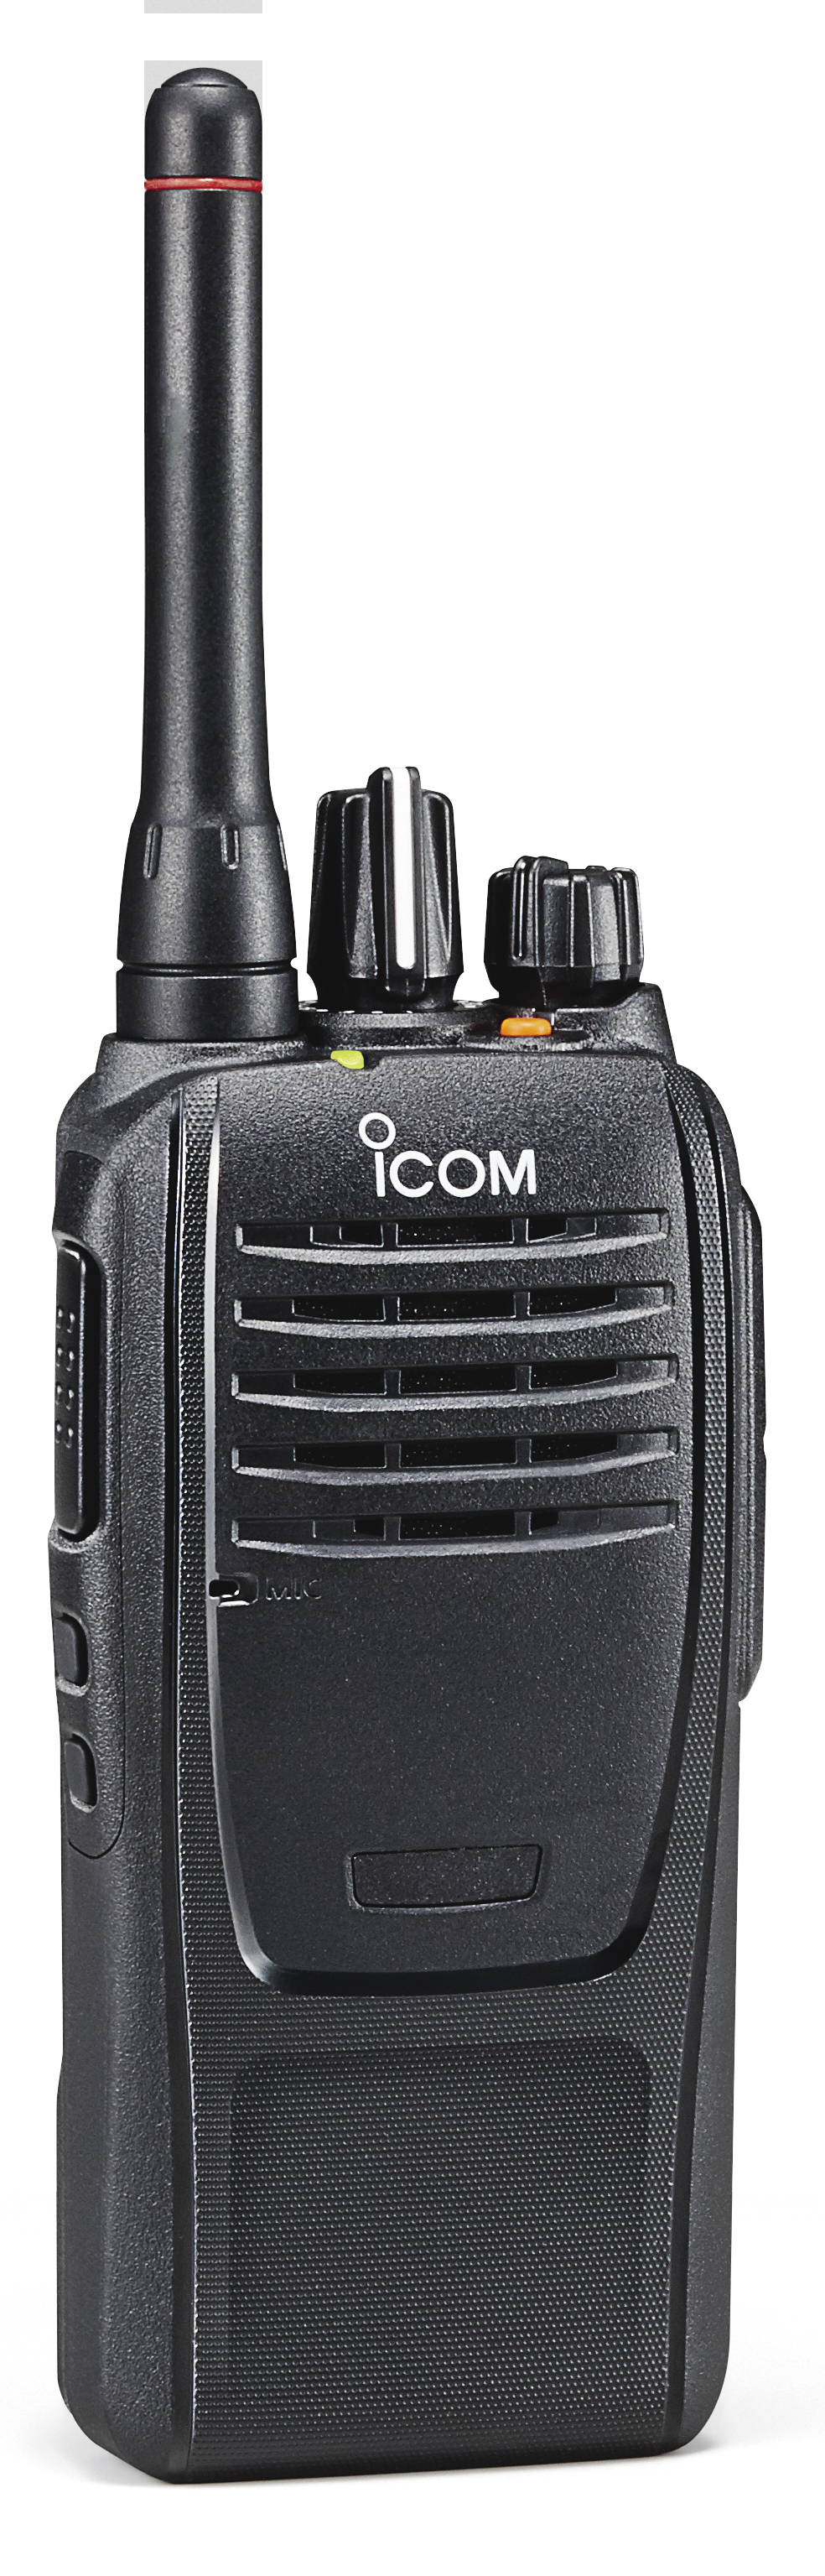 Icom IC-F2100D - BIW image